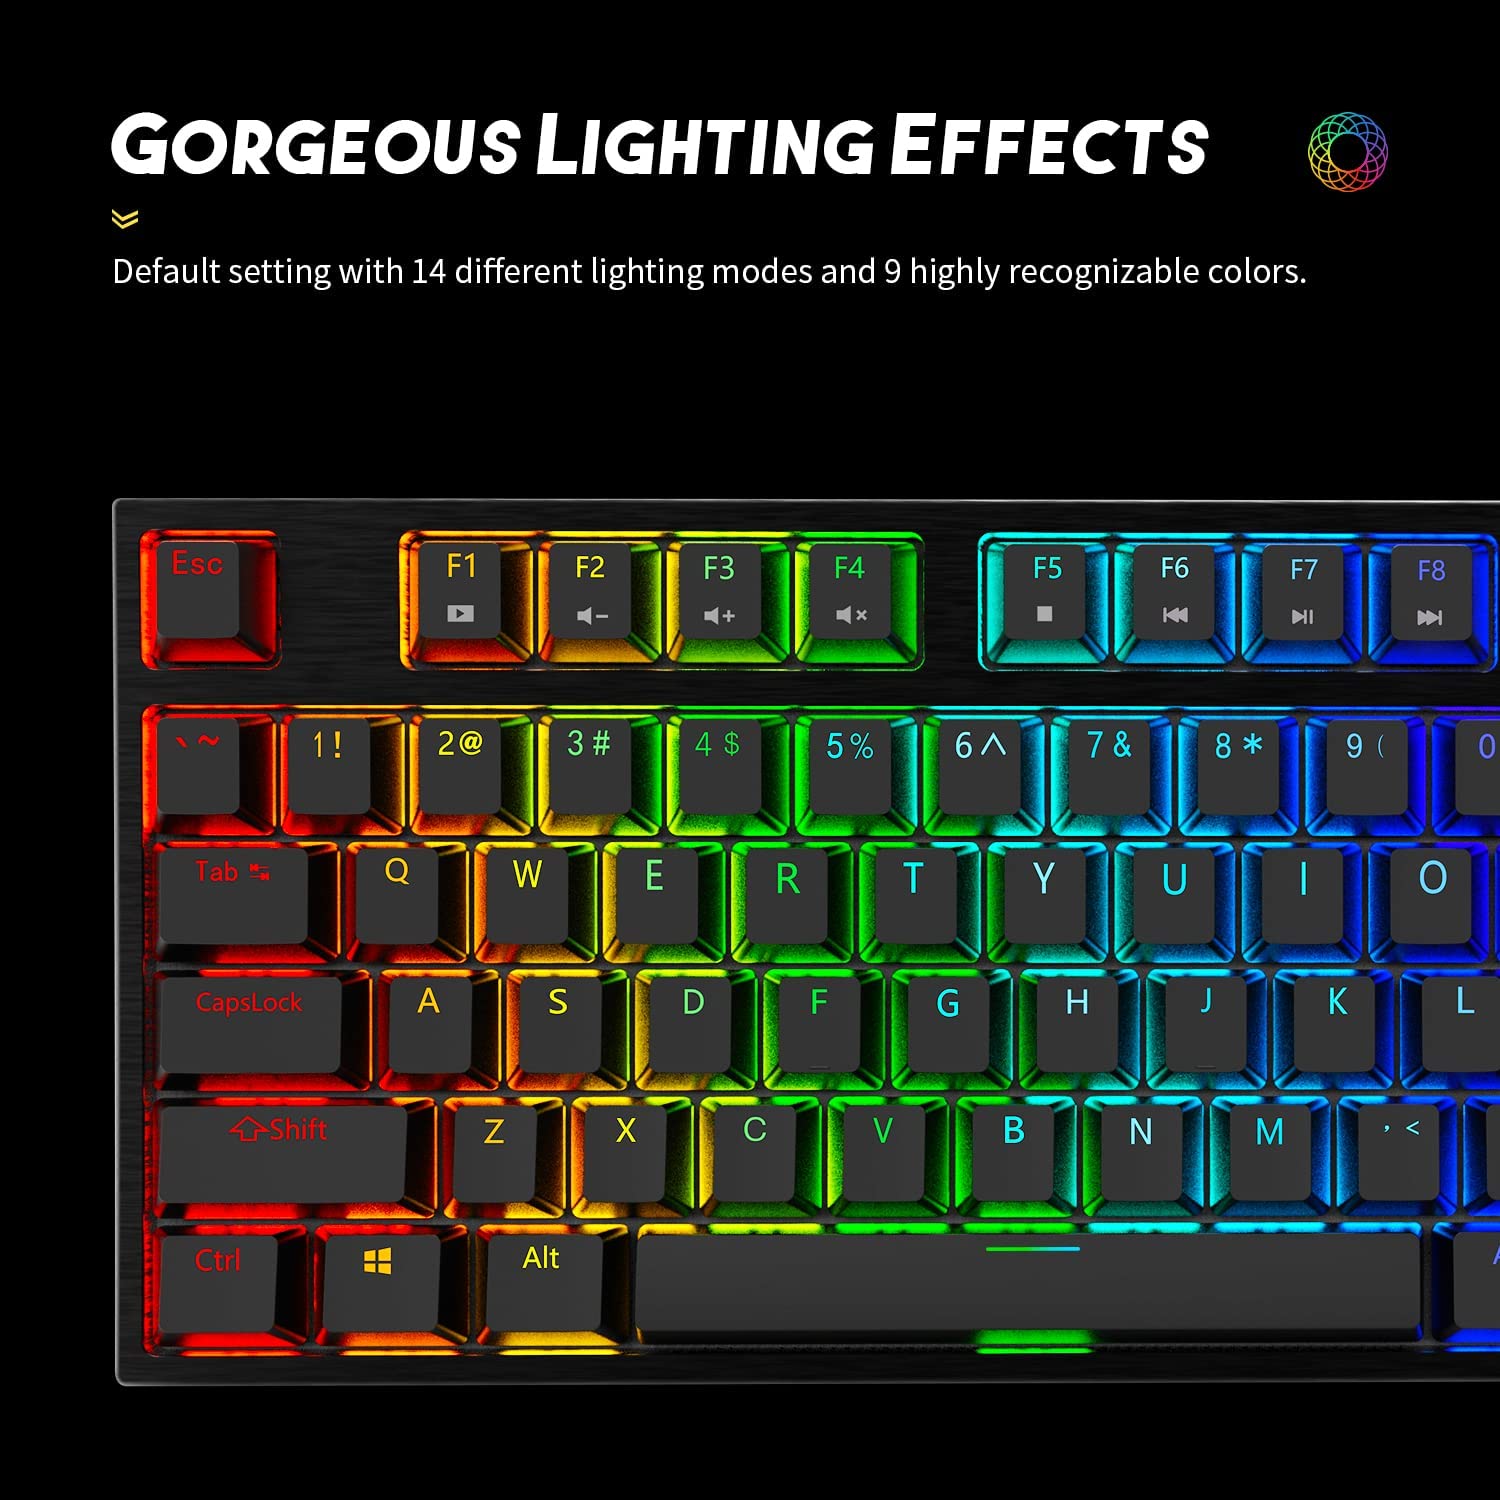 PC Gaming Keyboards RGB Backlit Mechanical Keyboard ABS keycap Programmable Macro Detachable USB Wired Keyboard for Windows PC（104 Keys Blue Switch